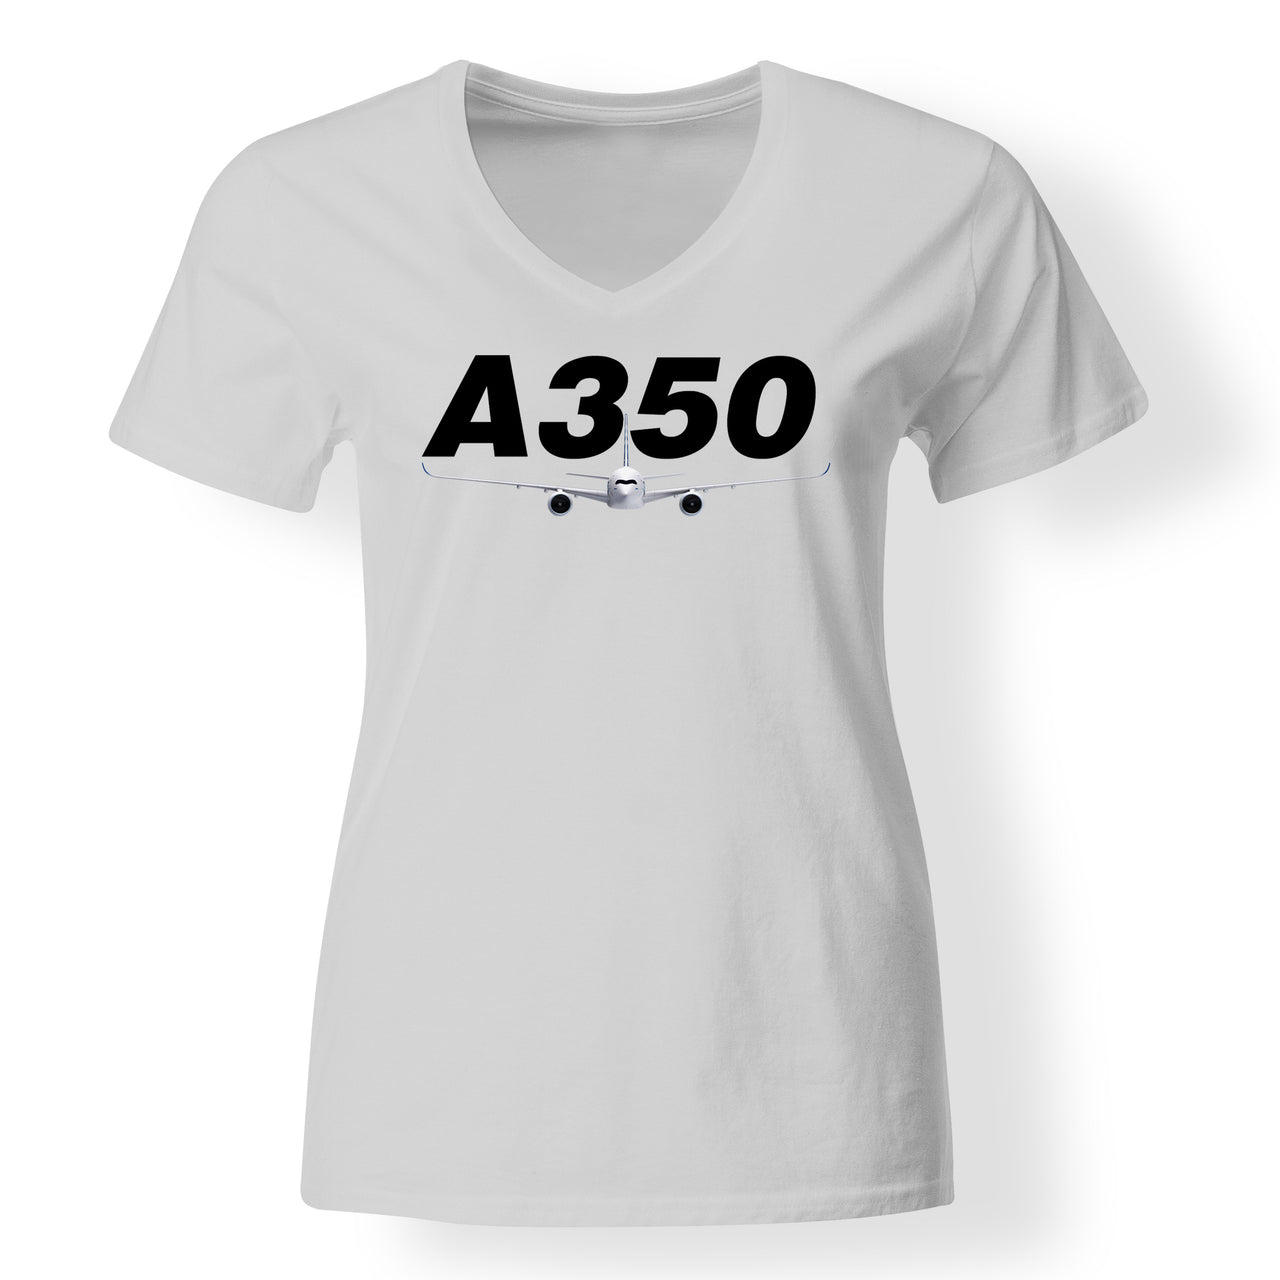 Super Airbus A350 Designed V-Neck T-Shirts